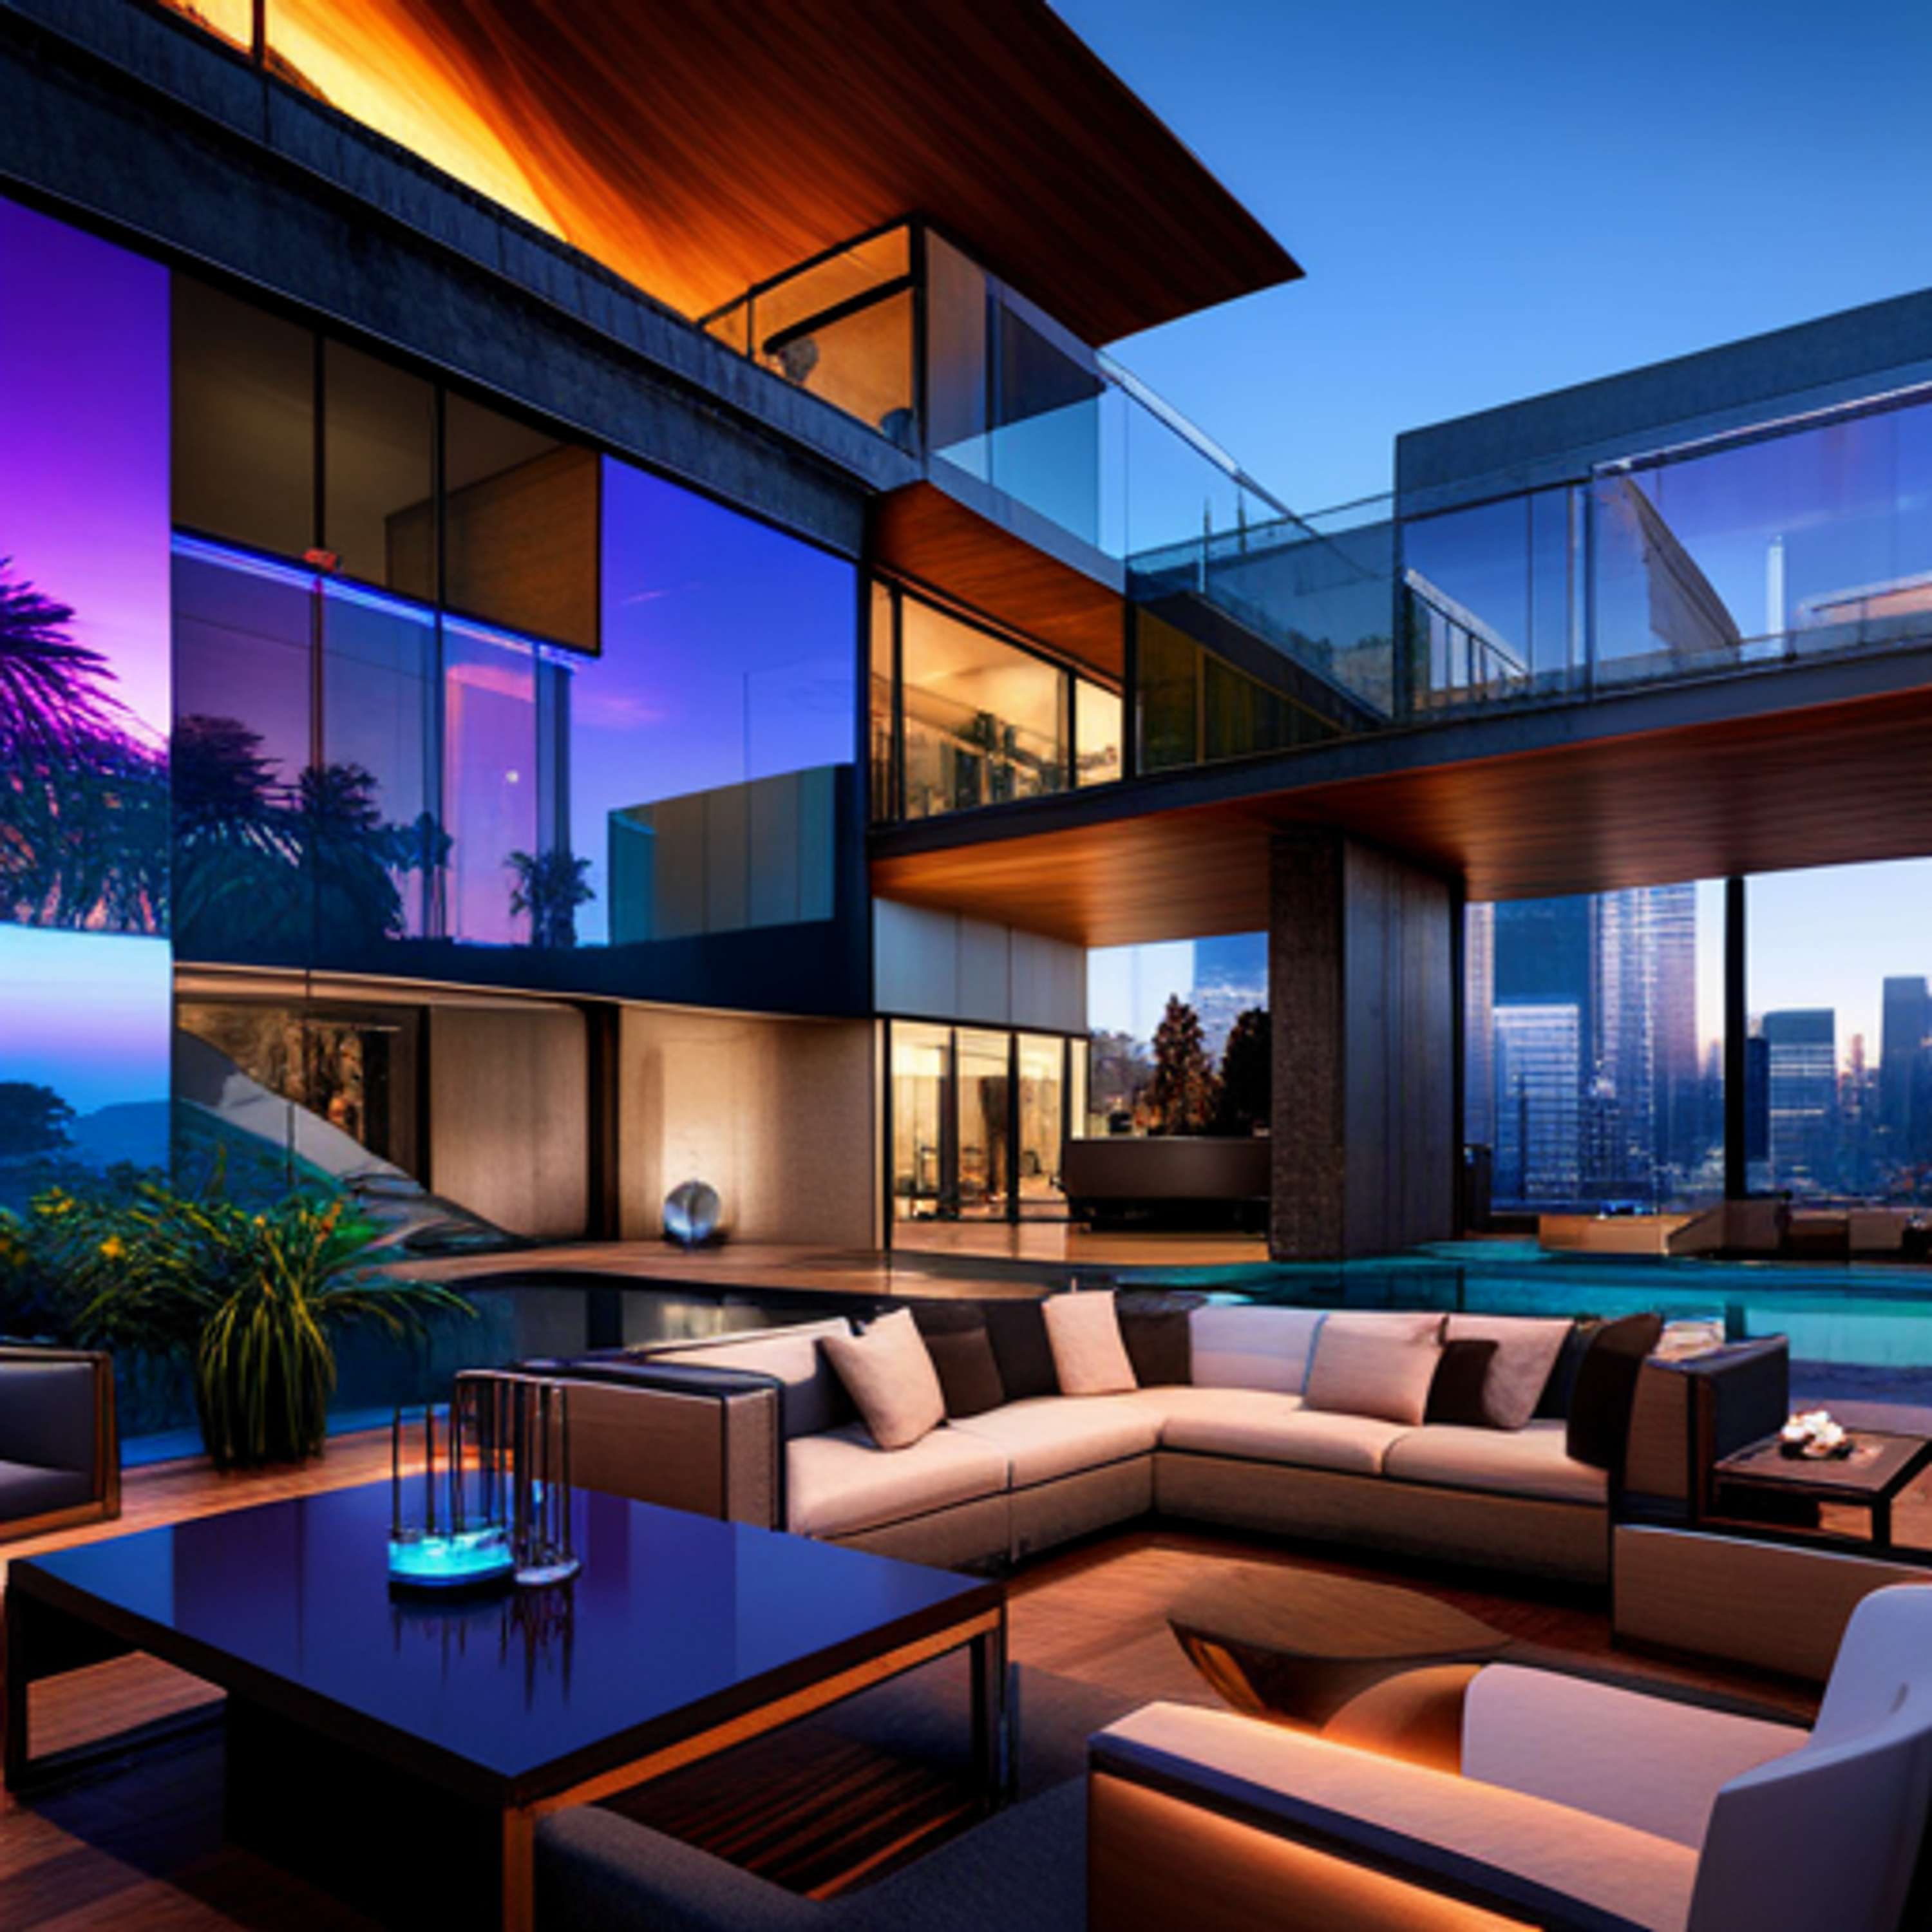 Calabasas Real Estate: Luxury Homes, Celebrity Hotspots & Market Trends